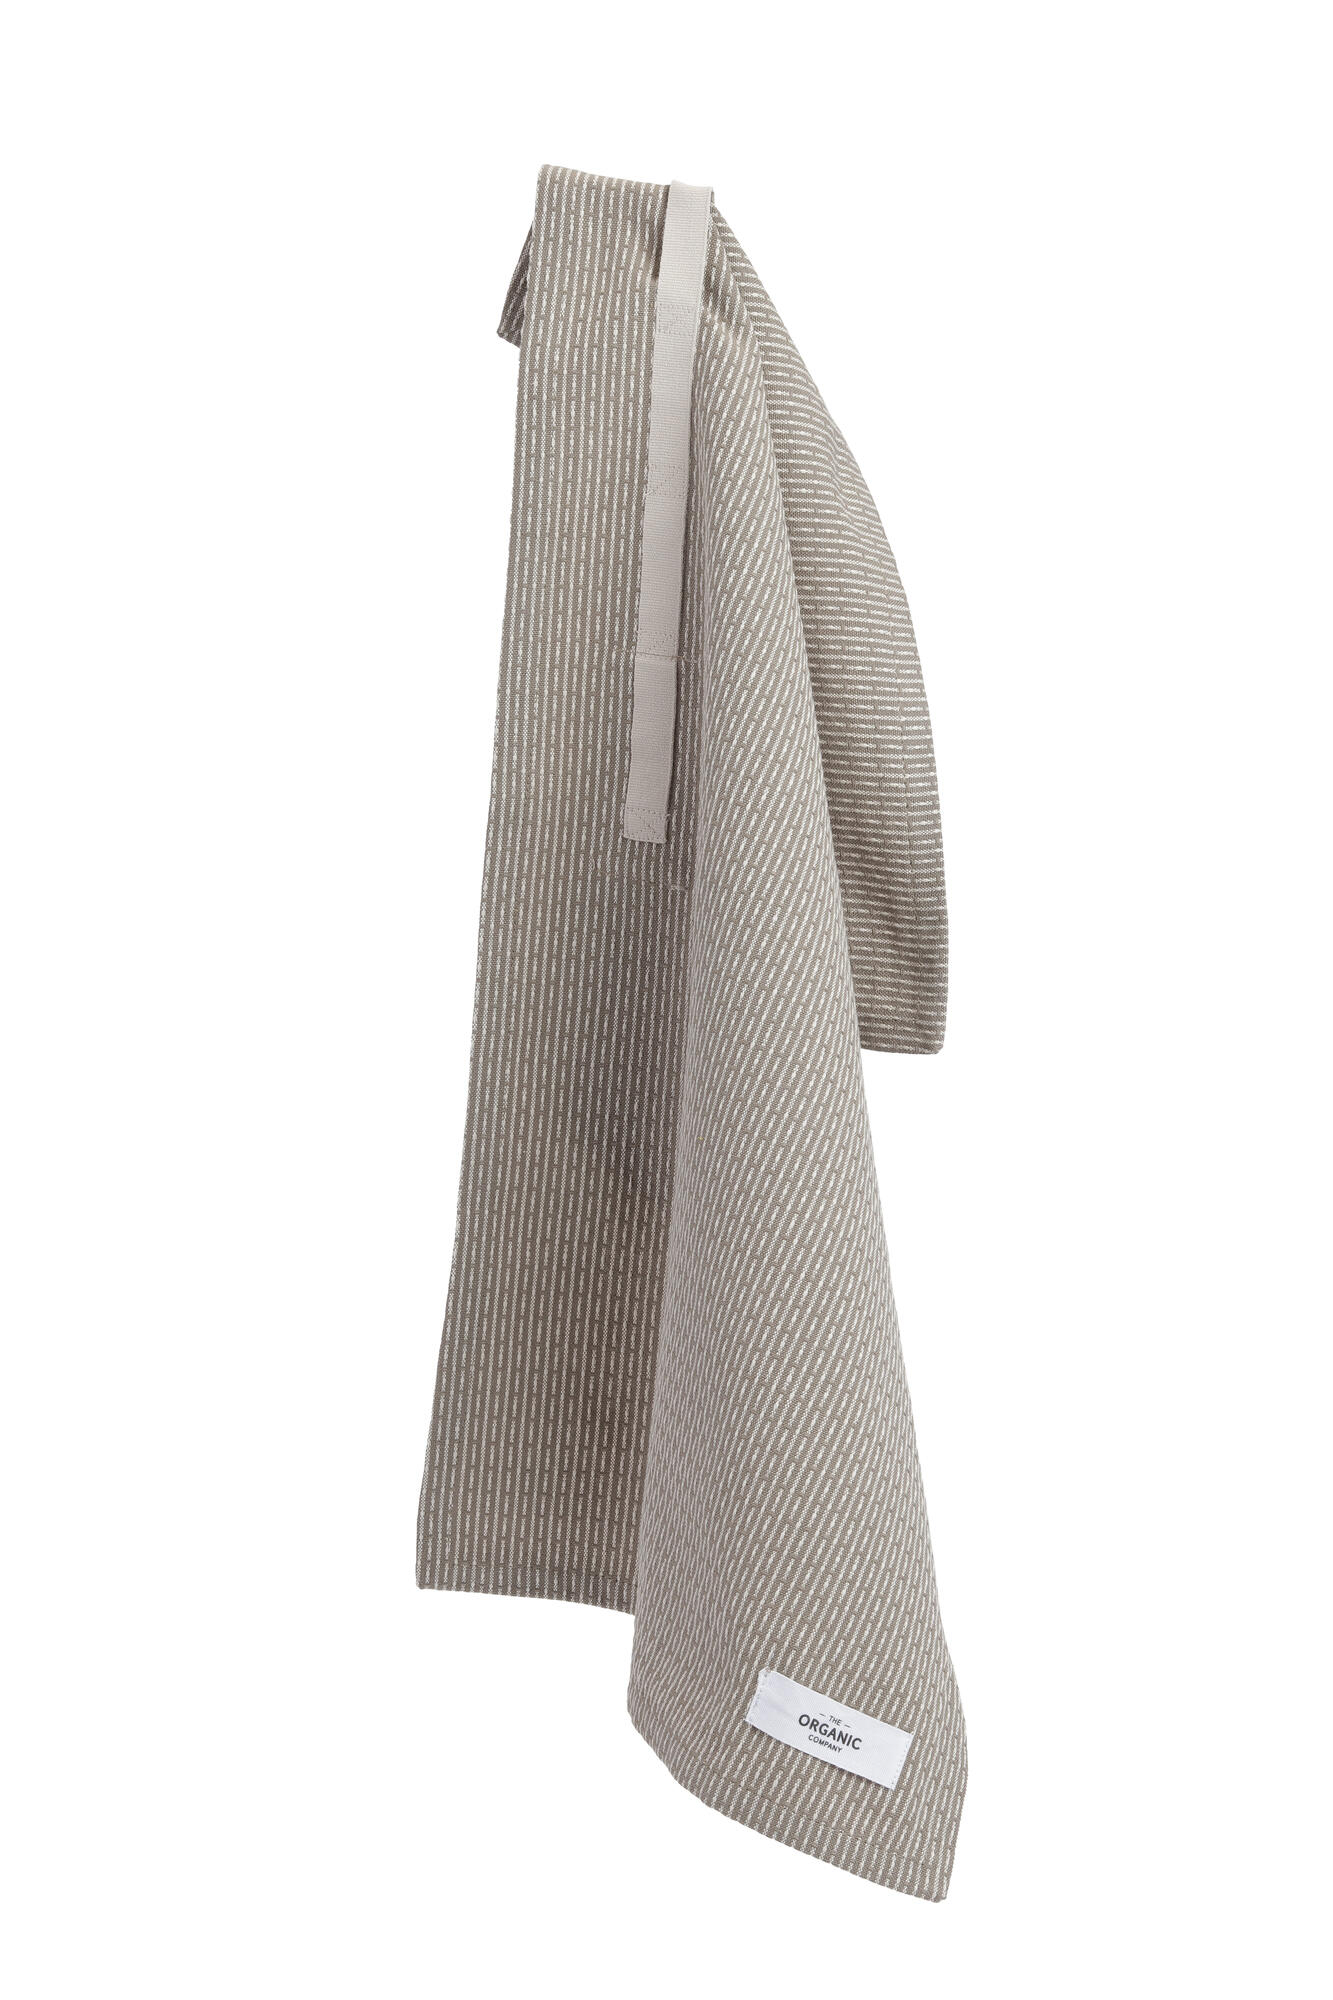 Håndklæde - Ler / lys beige 35 x 60 cm